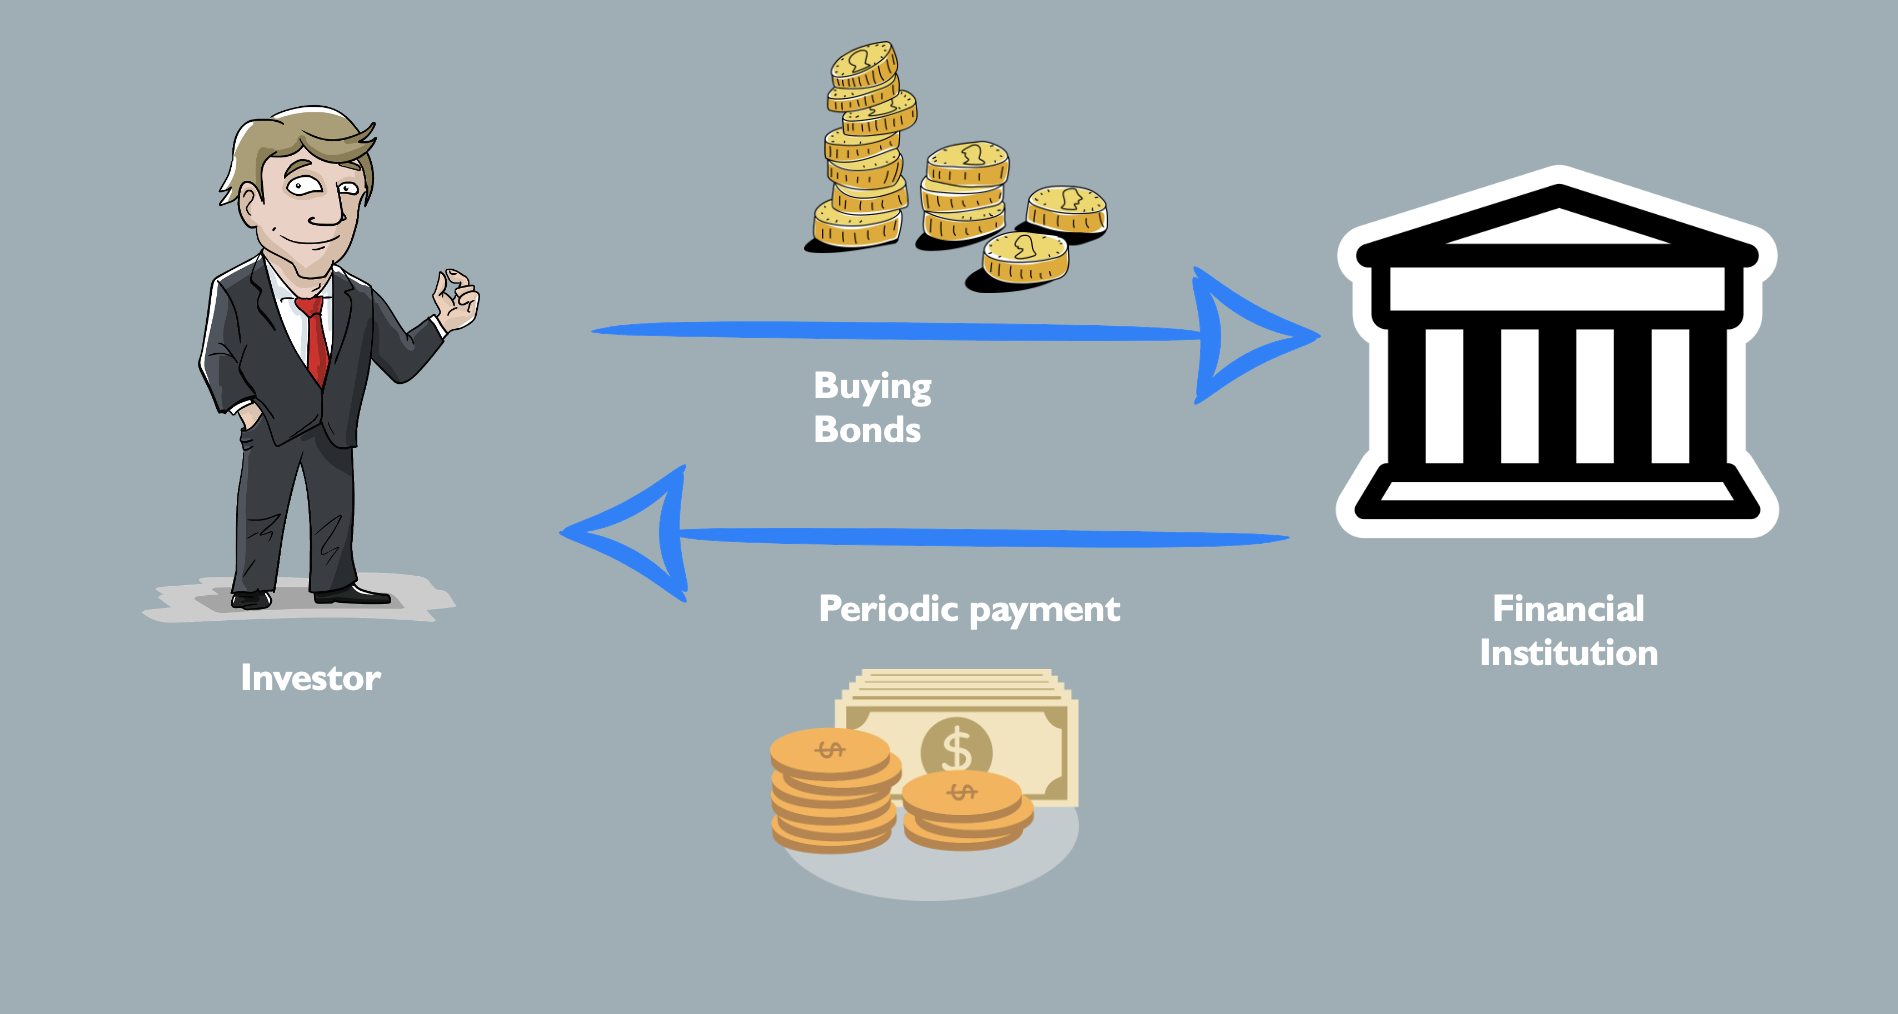 How bond (financial) works?